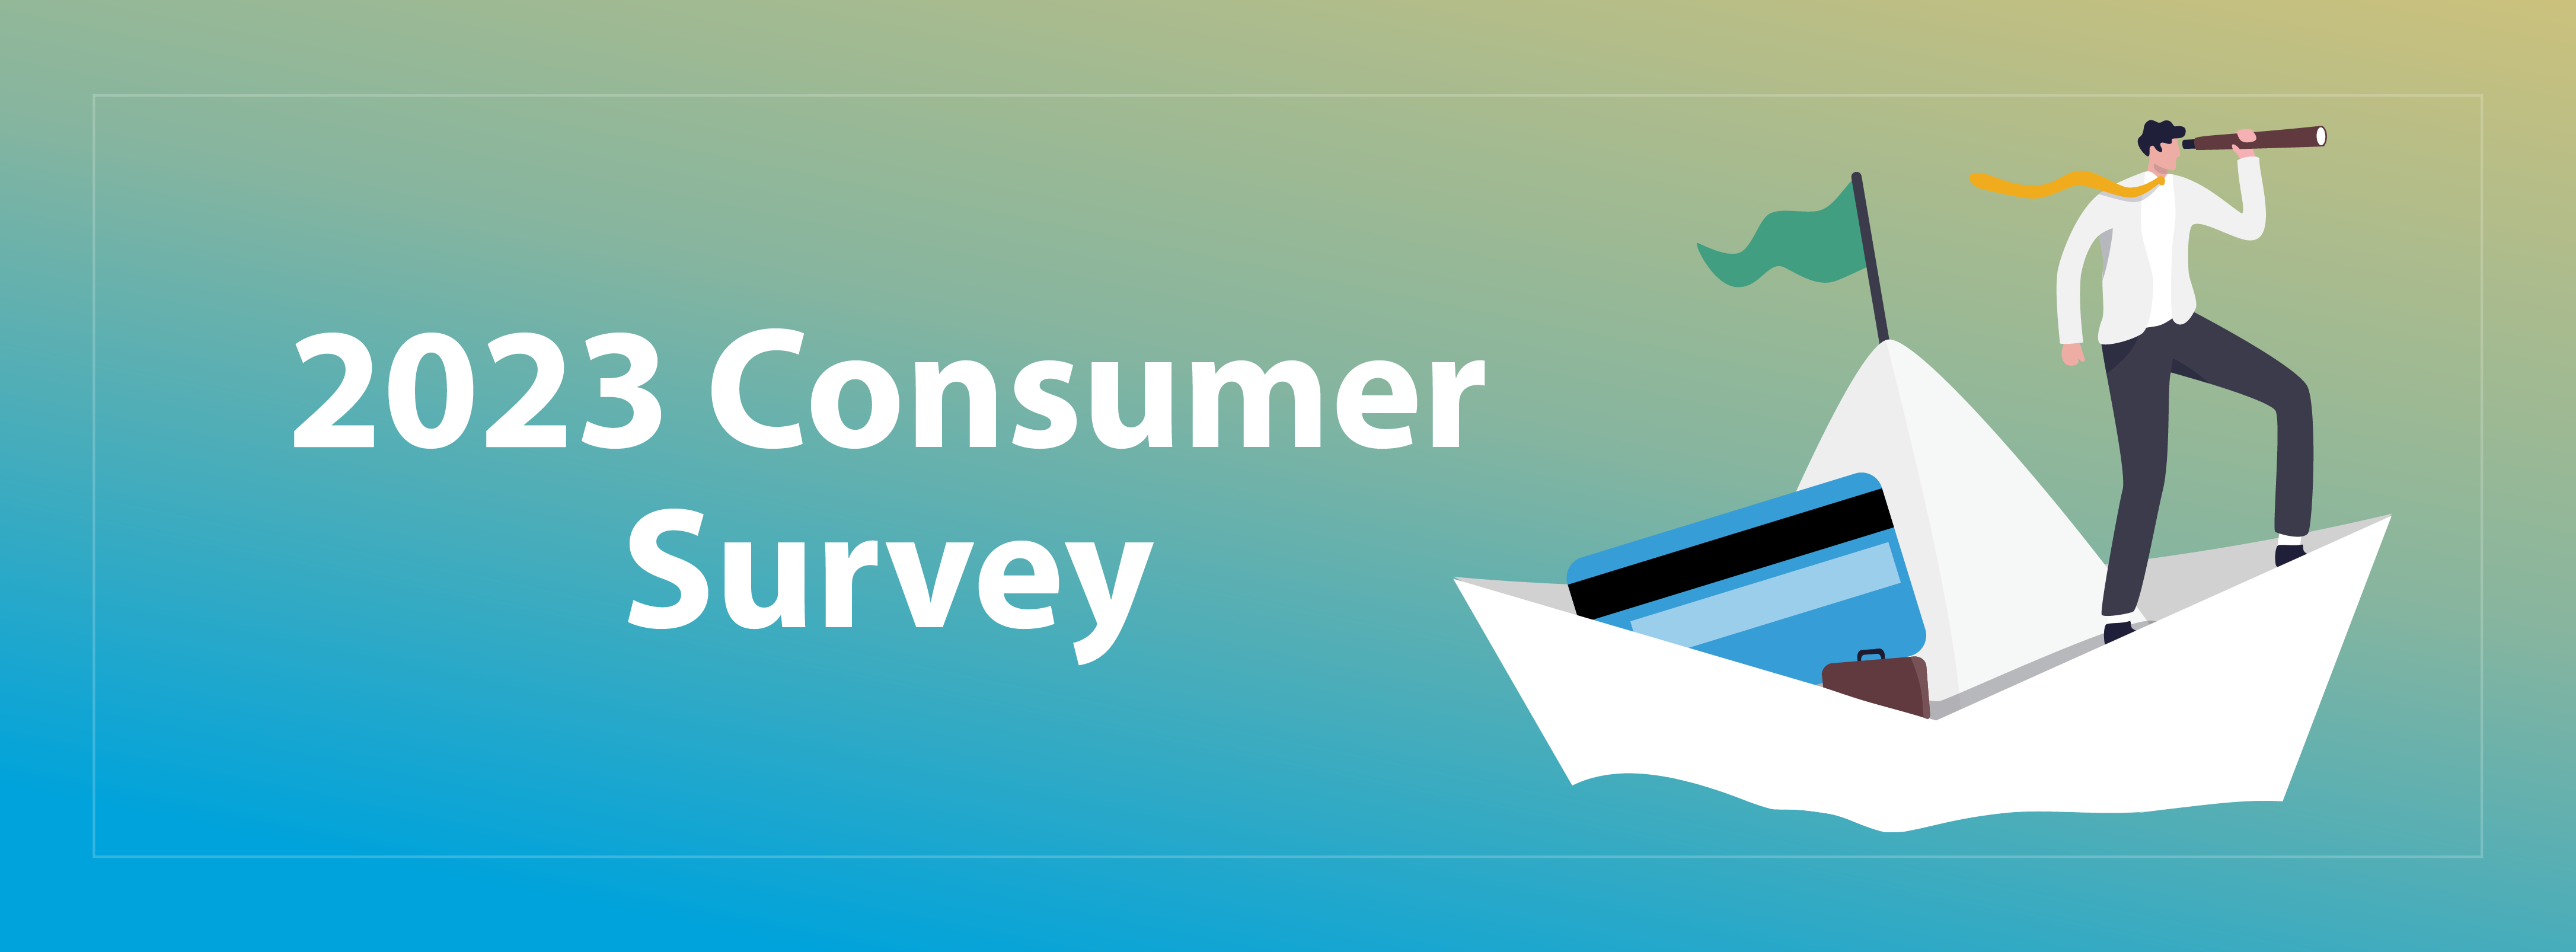 2023 Consumer Survey